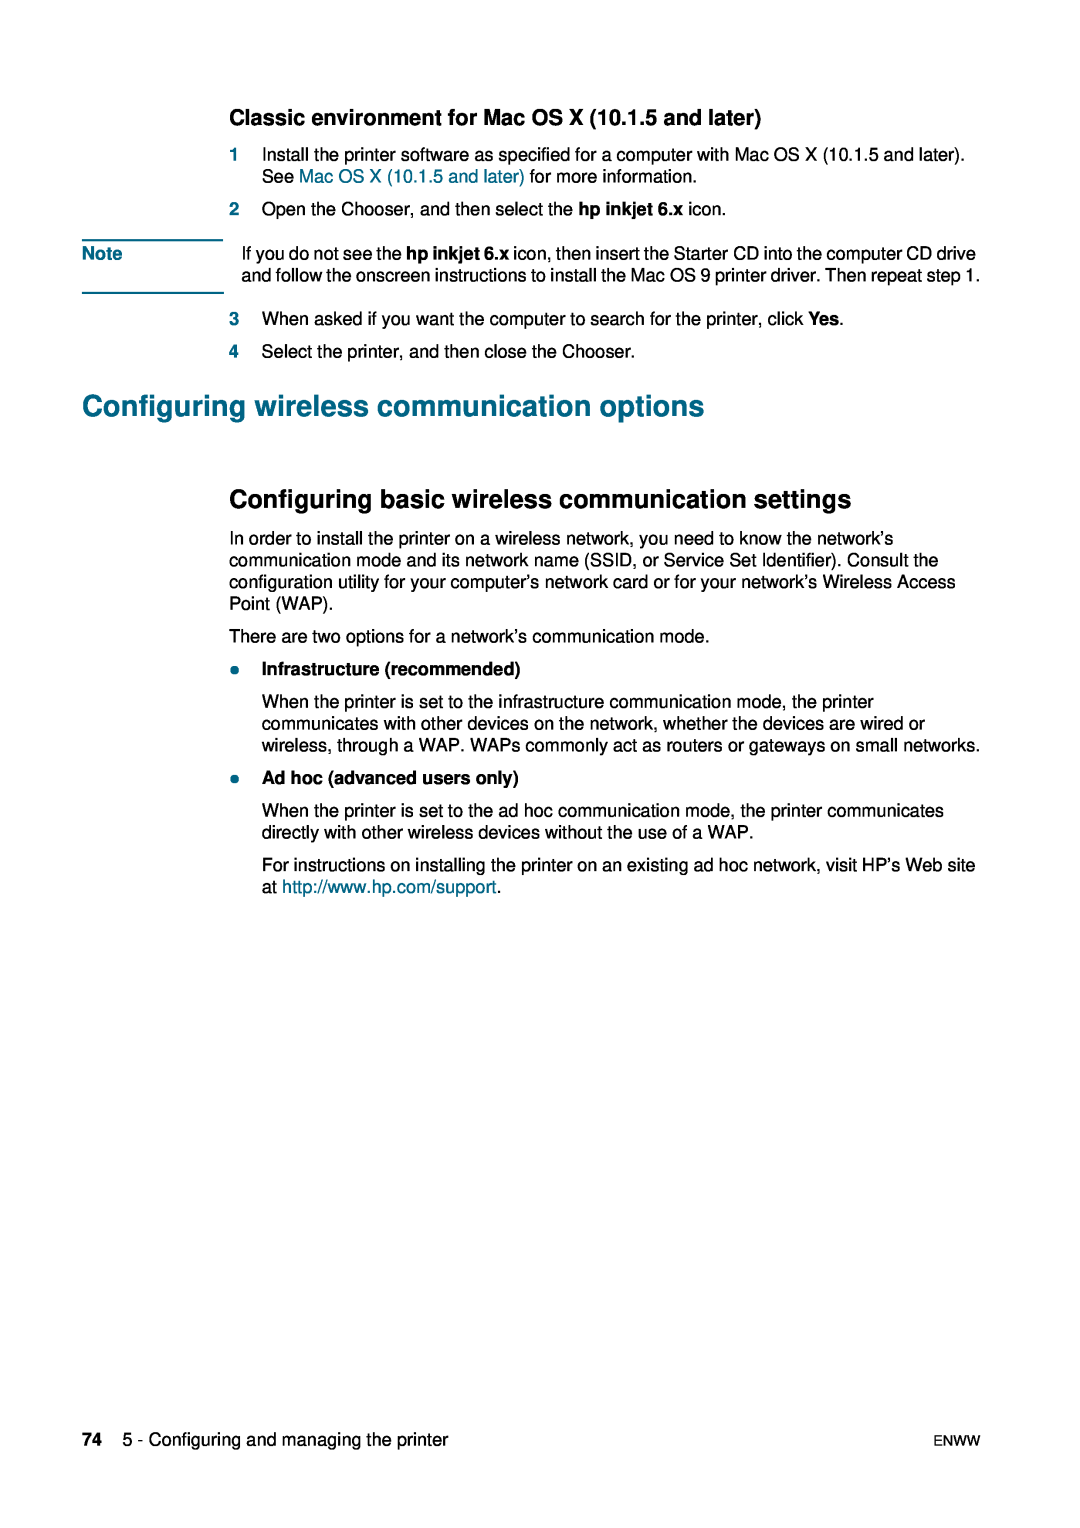 HP 1200 manual Configuring wireless communication options, Configuring basic wireless communication settings 